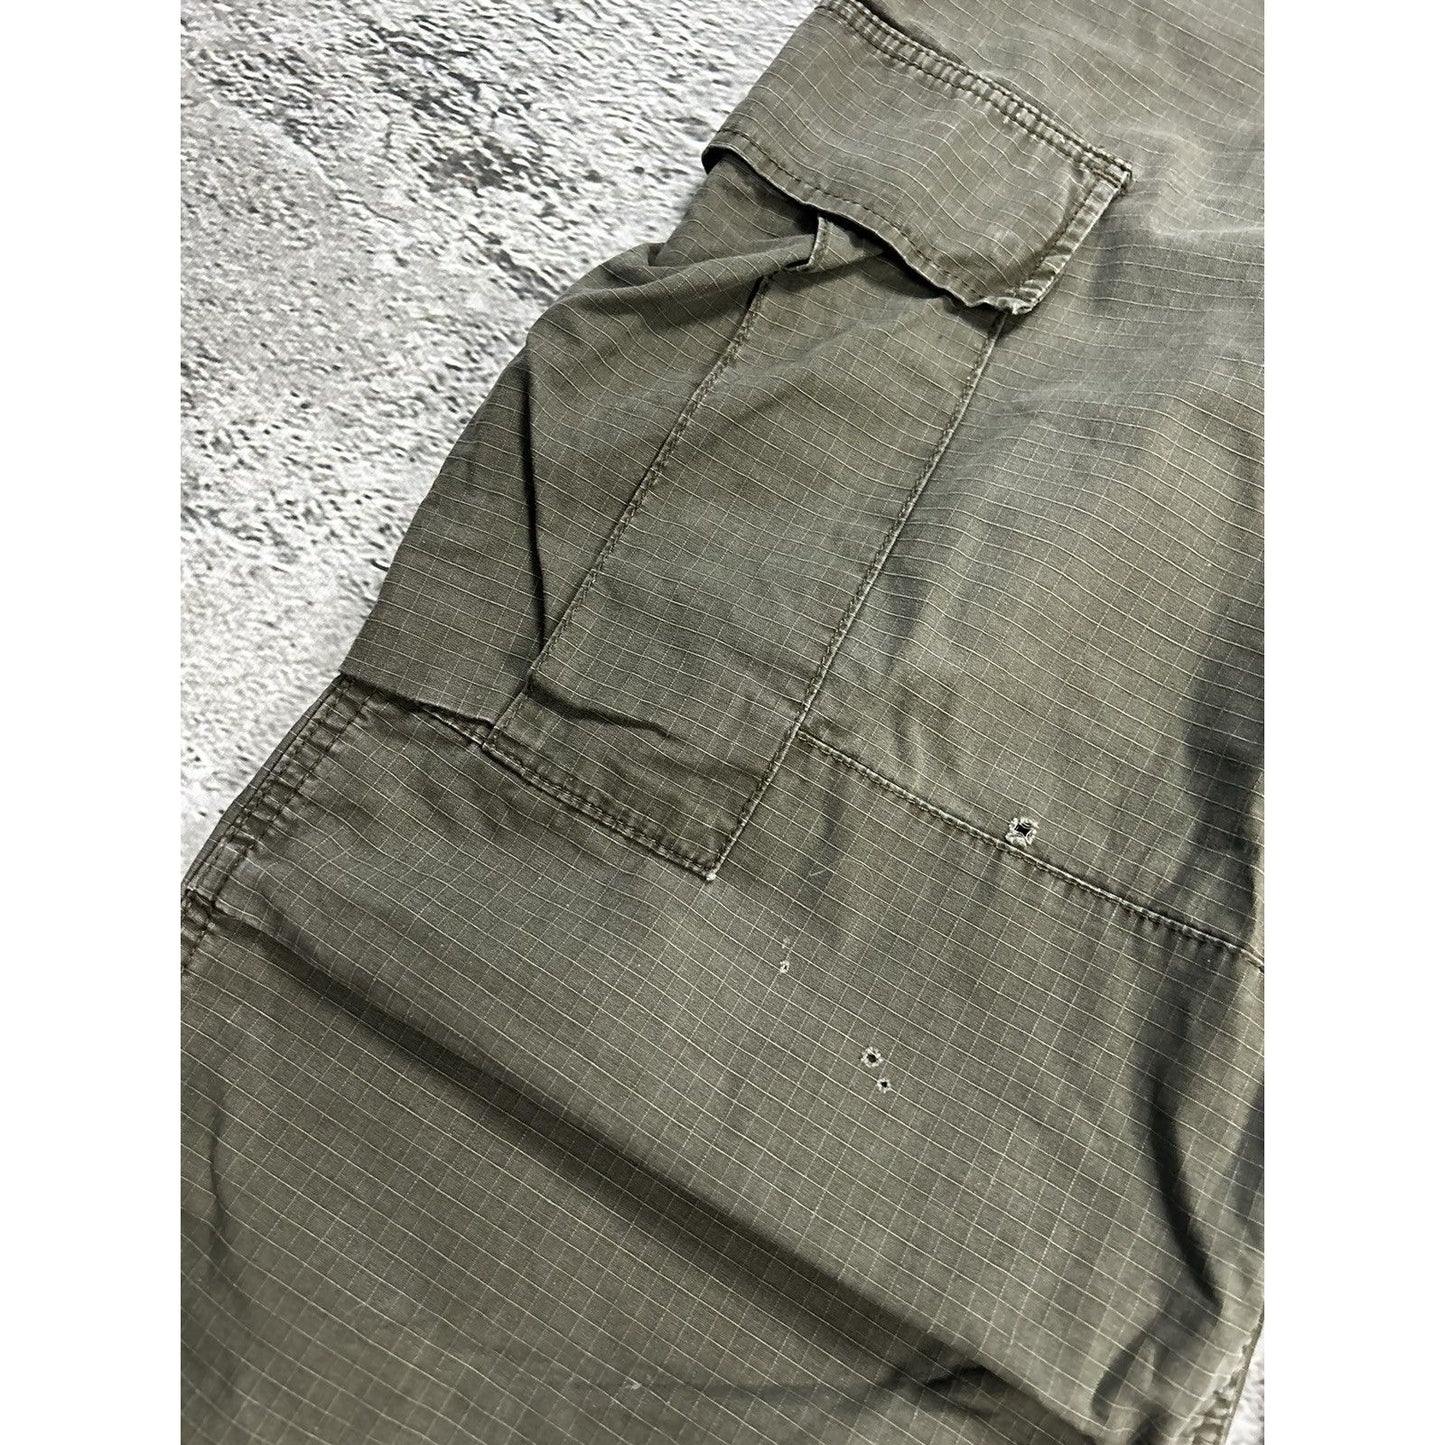 Carhartt vintage cargo pants khaki workwear regular baggy